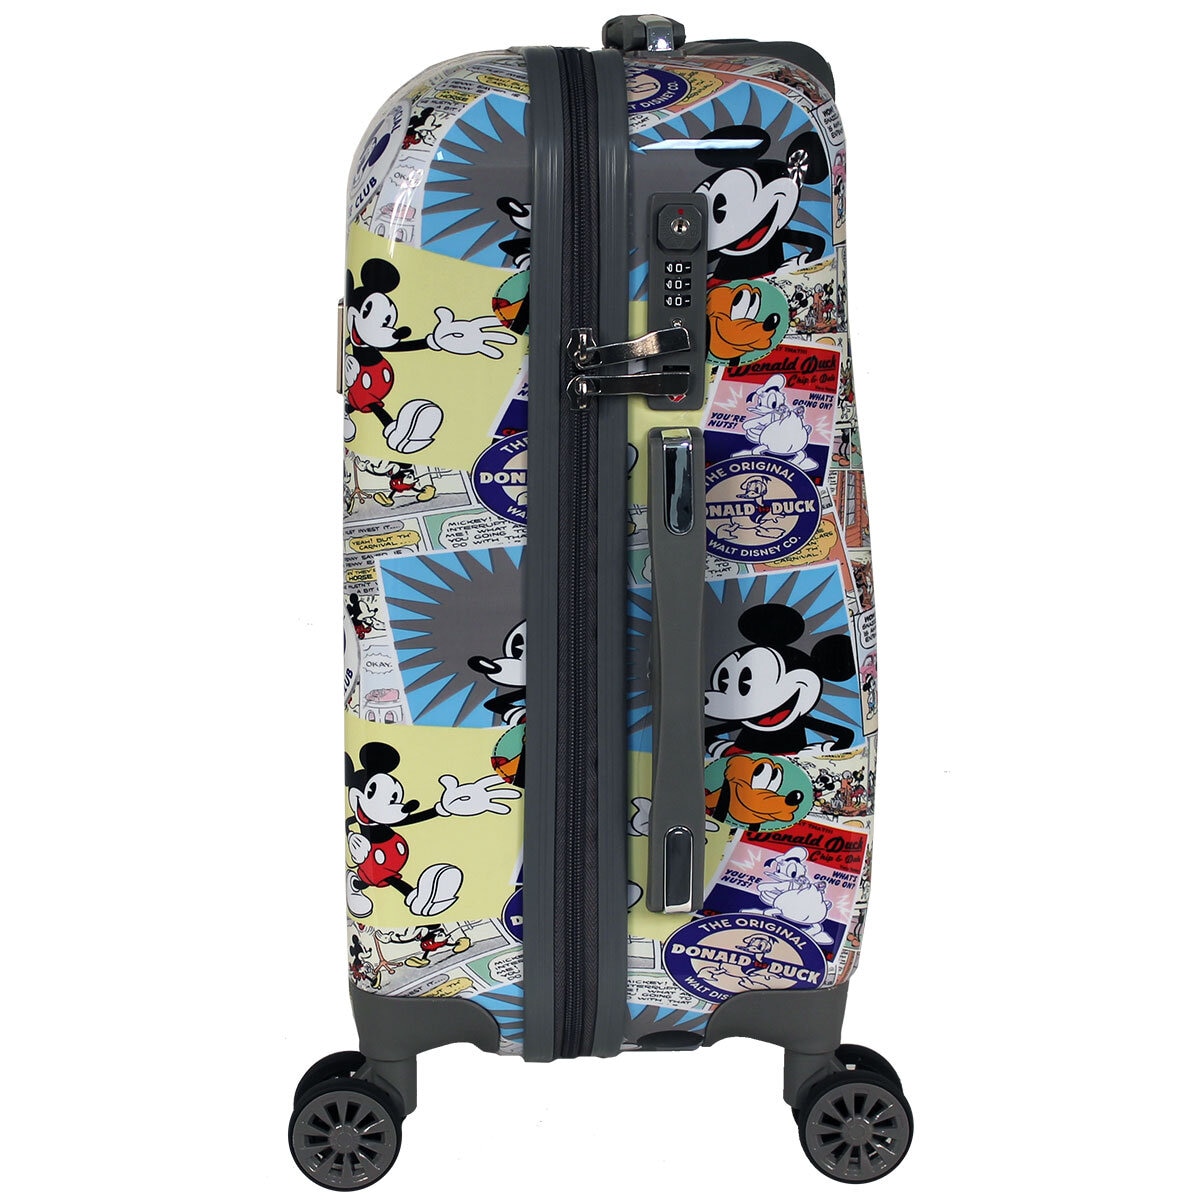 Disney Comic Luggage Set